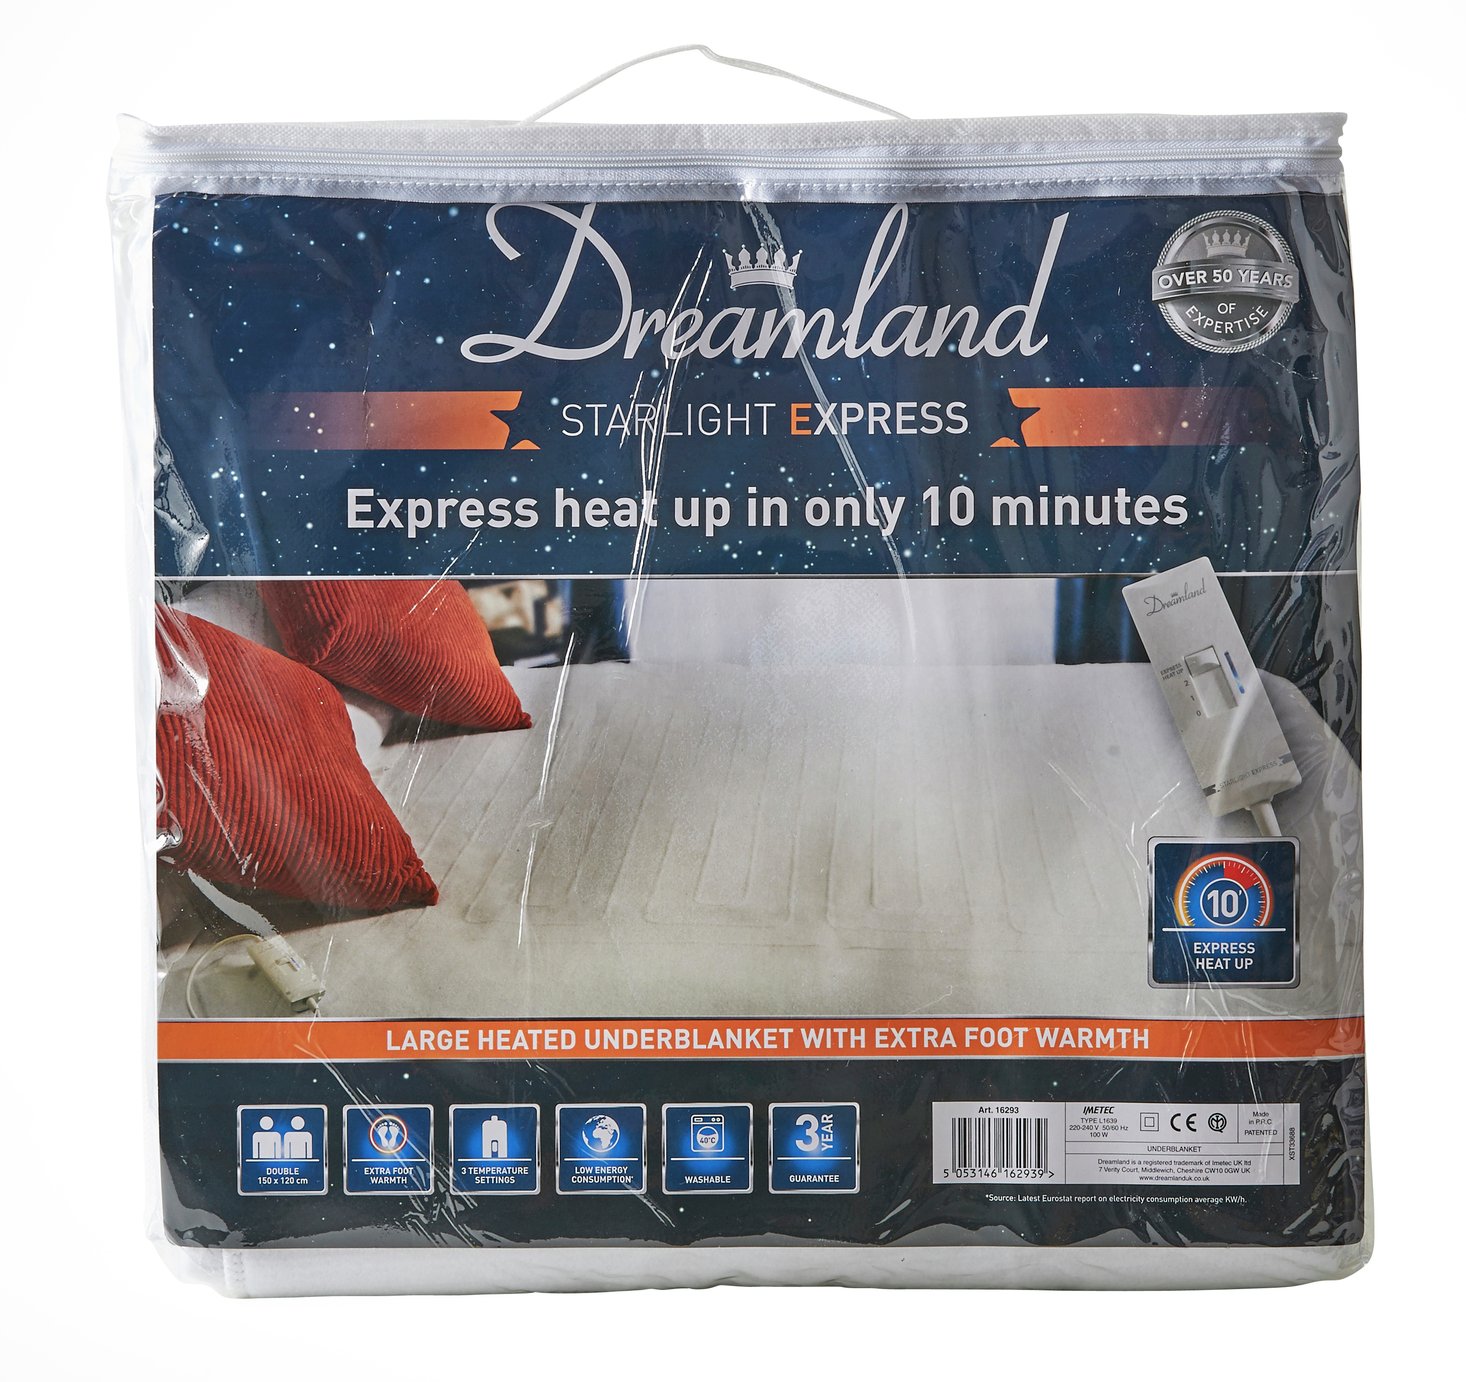 Dreamland Starlight Express Heated Underblanket - Double